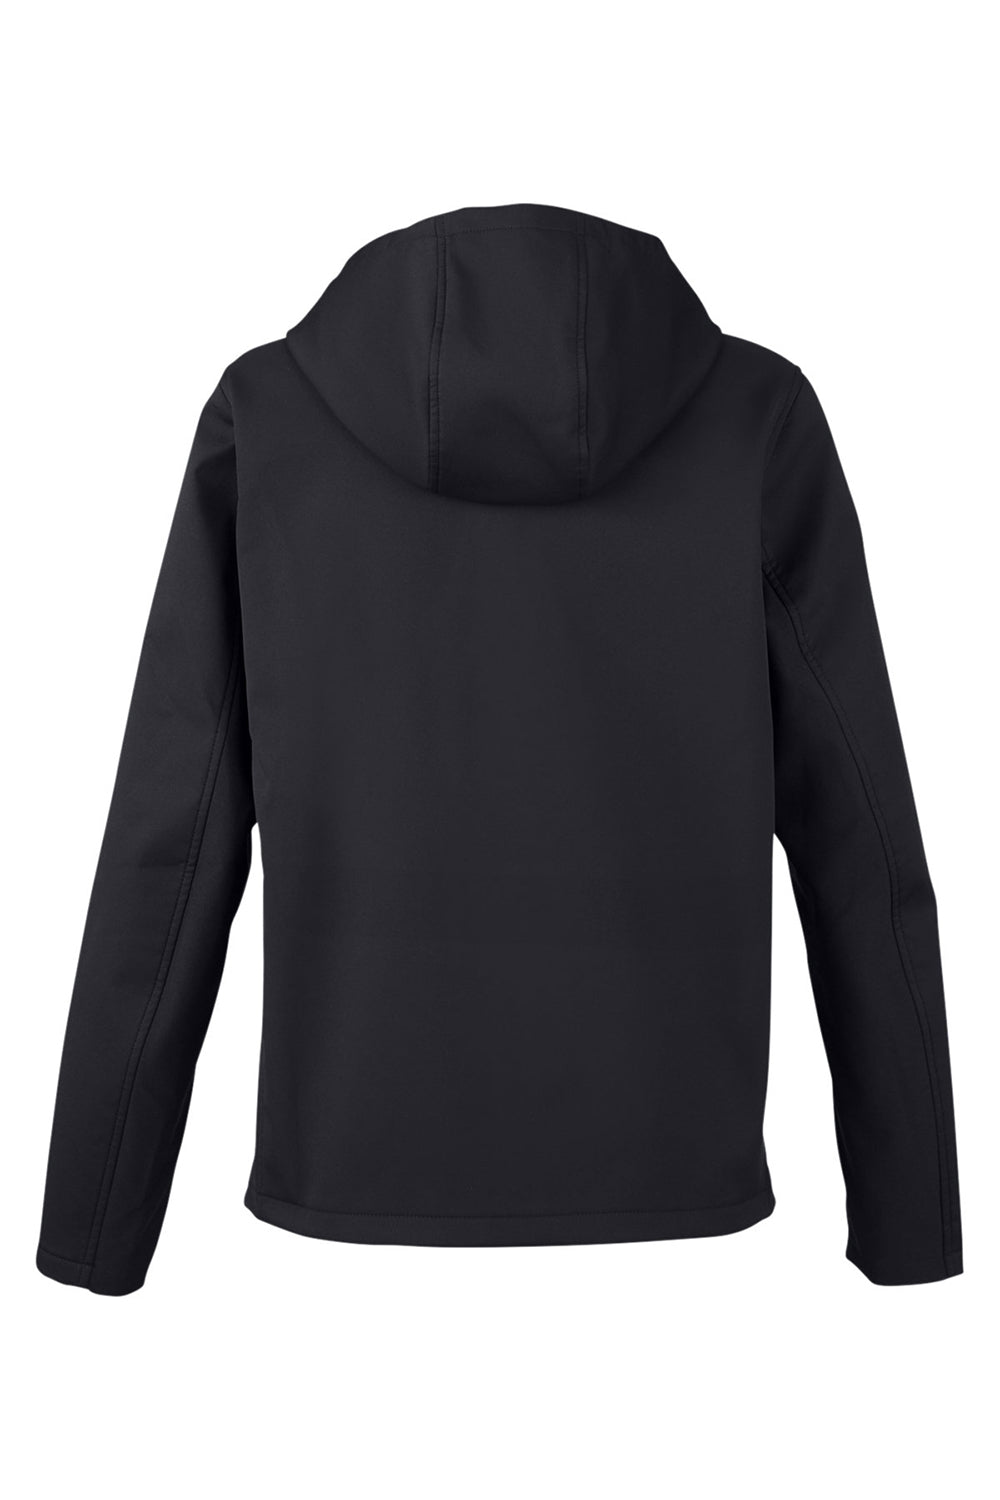 Under Armour 1371595 Womens CGI Shield 2.0 Windproof & Waterproof Full Zip Hooded Jacket Black Flat Back